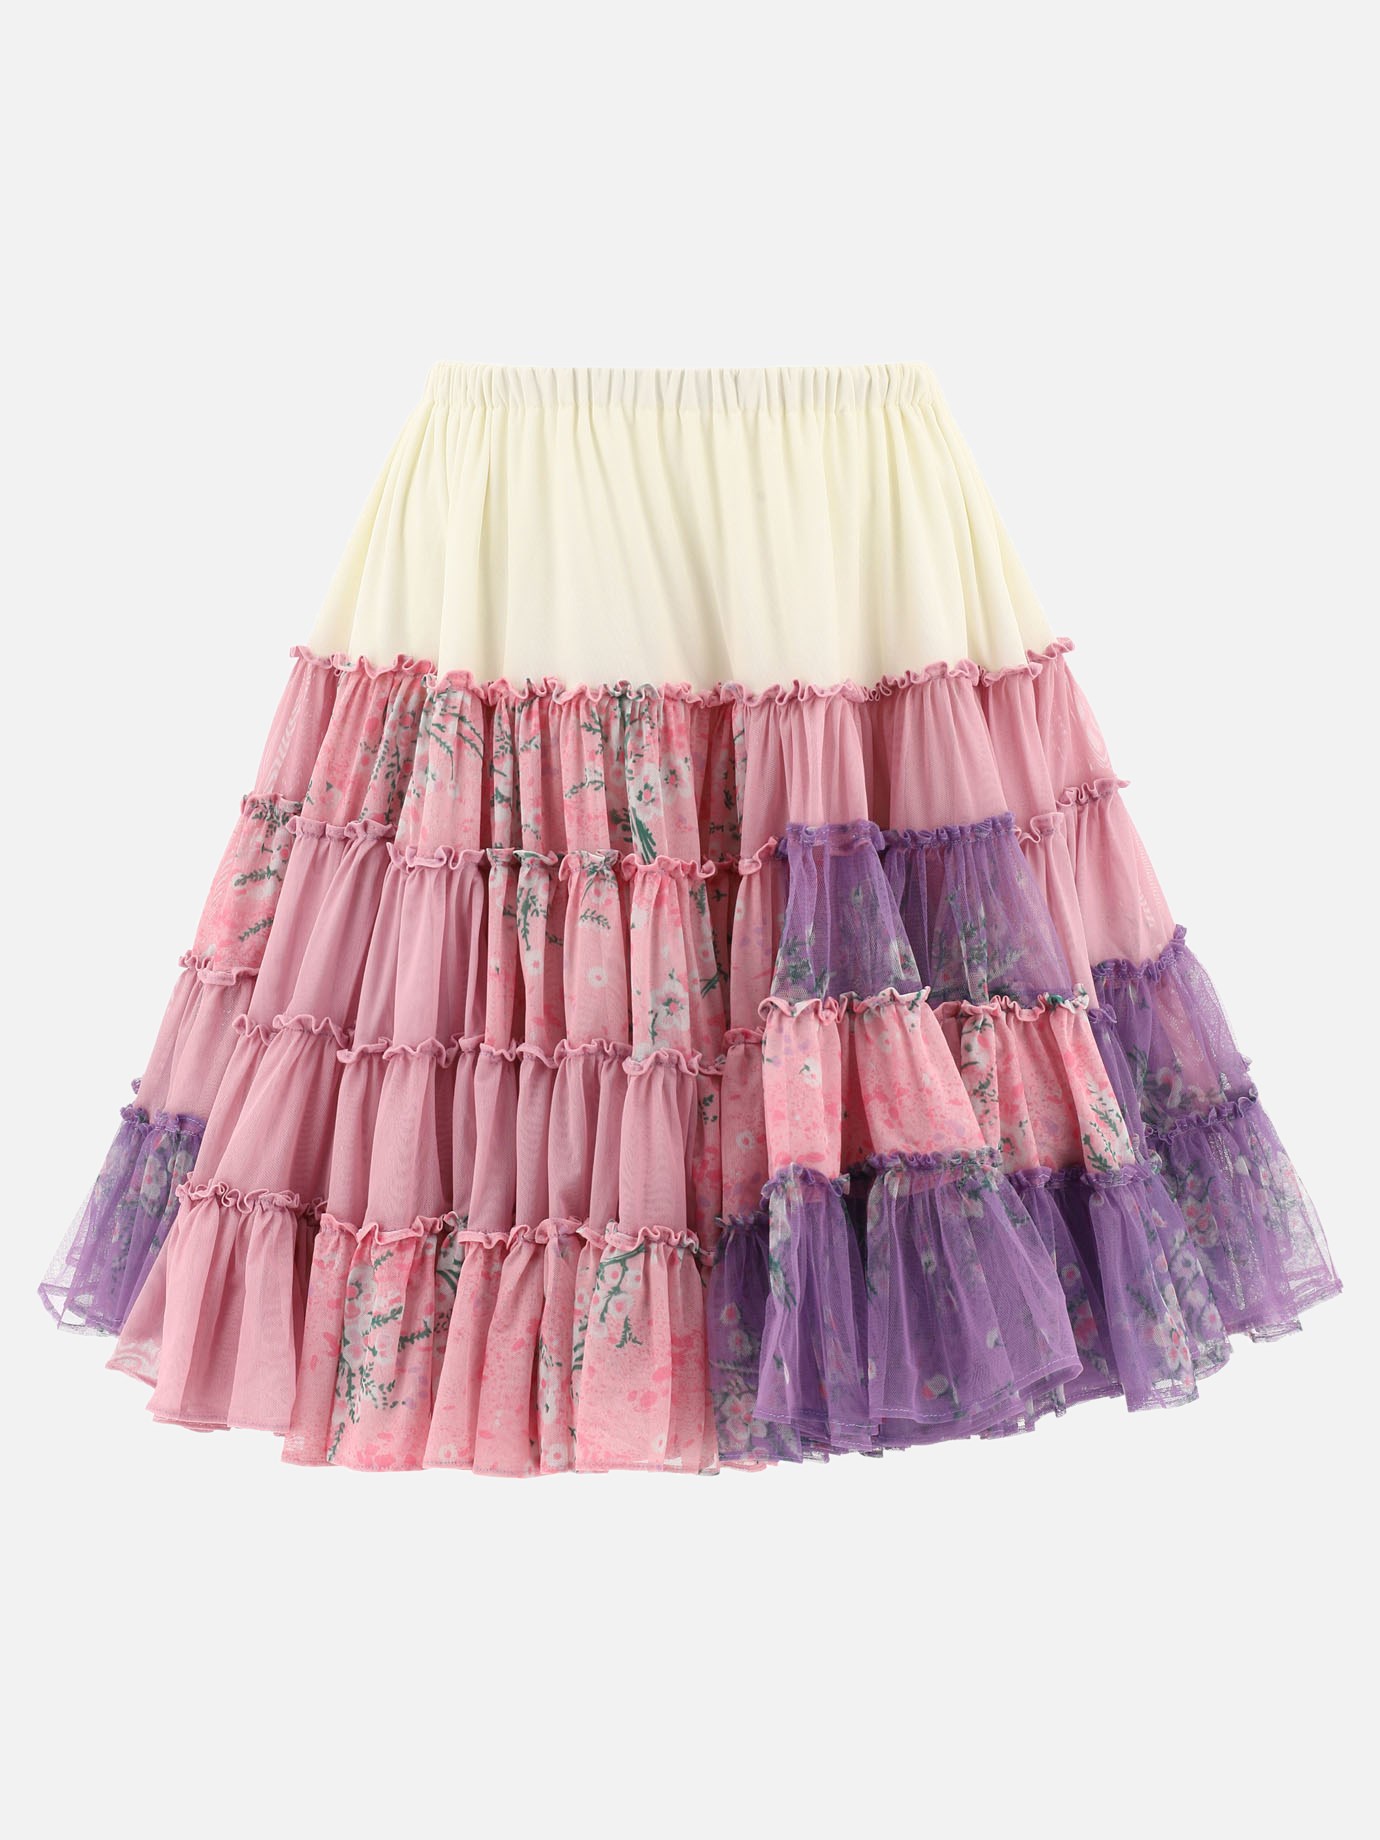 Floral skirt with flounces